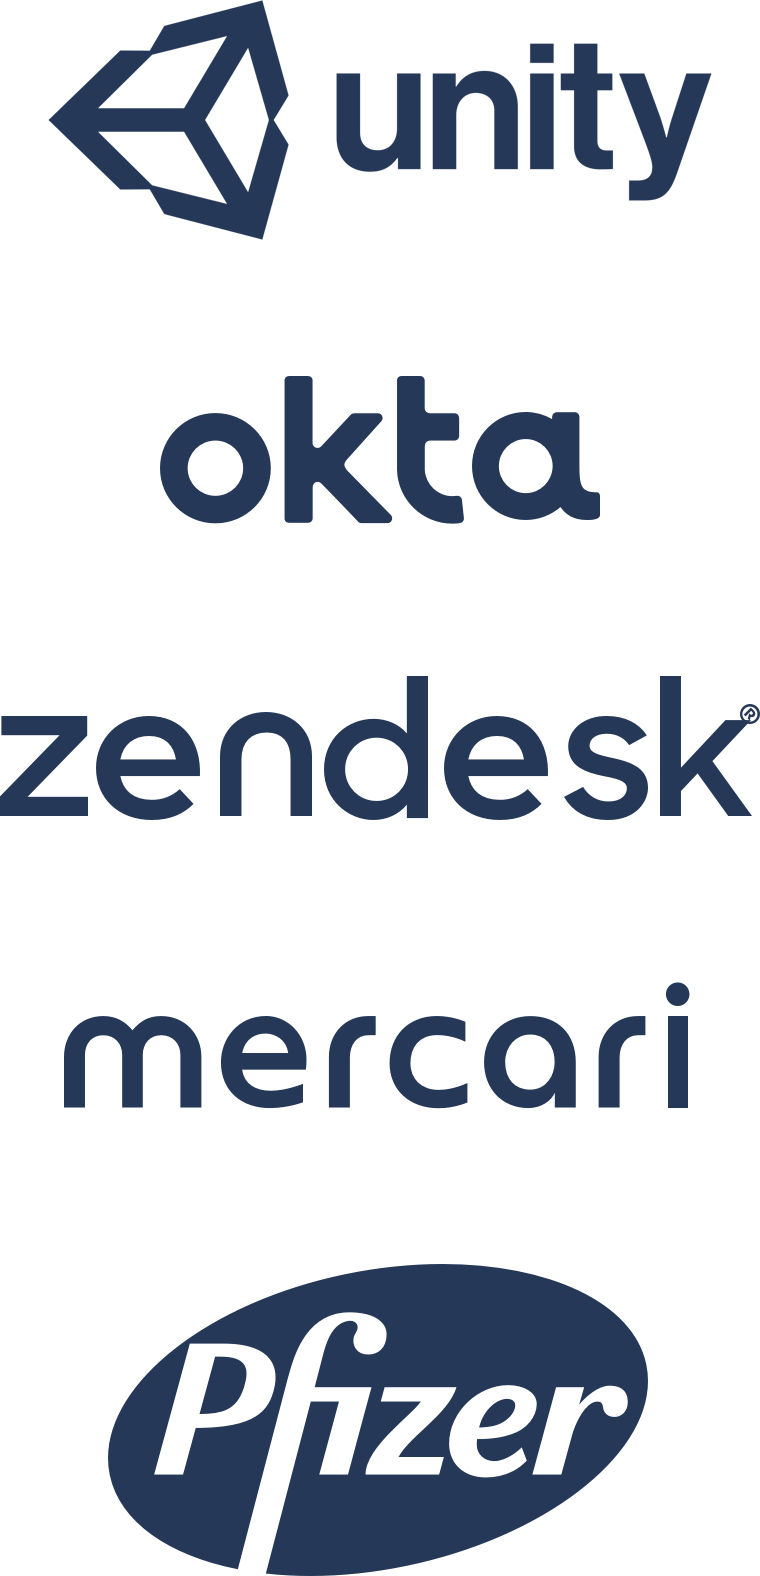 Логотипы Unity, Okta, Zendesk, Mercari, Pfizer